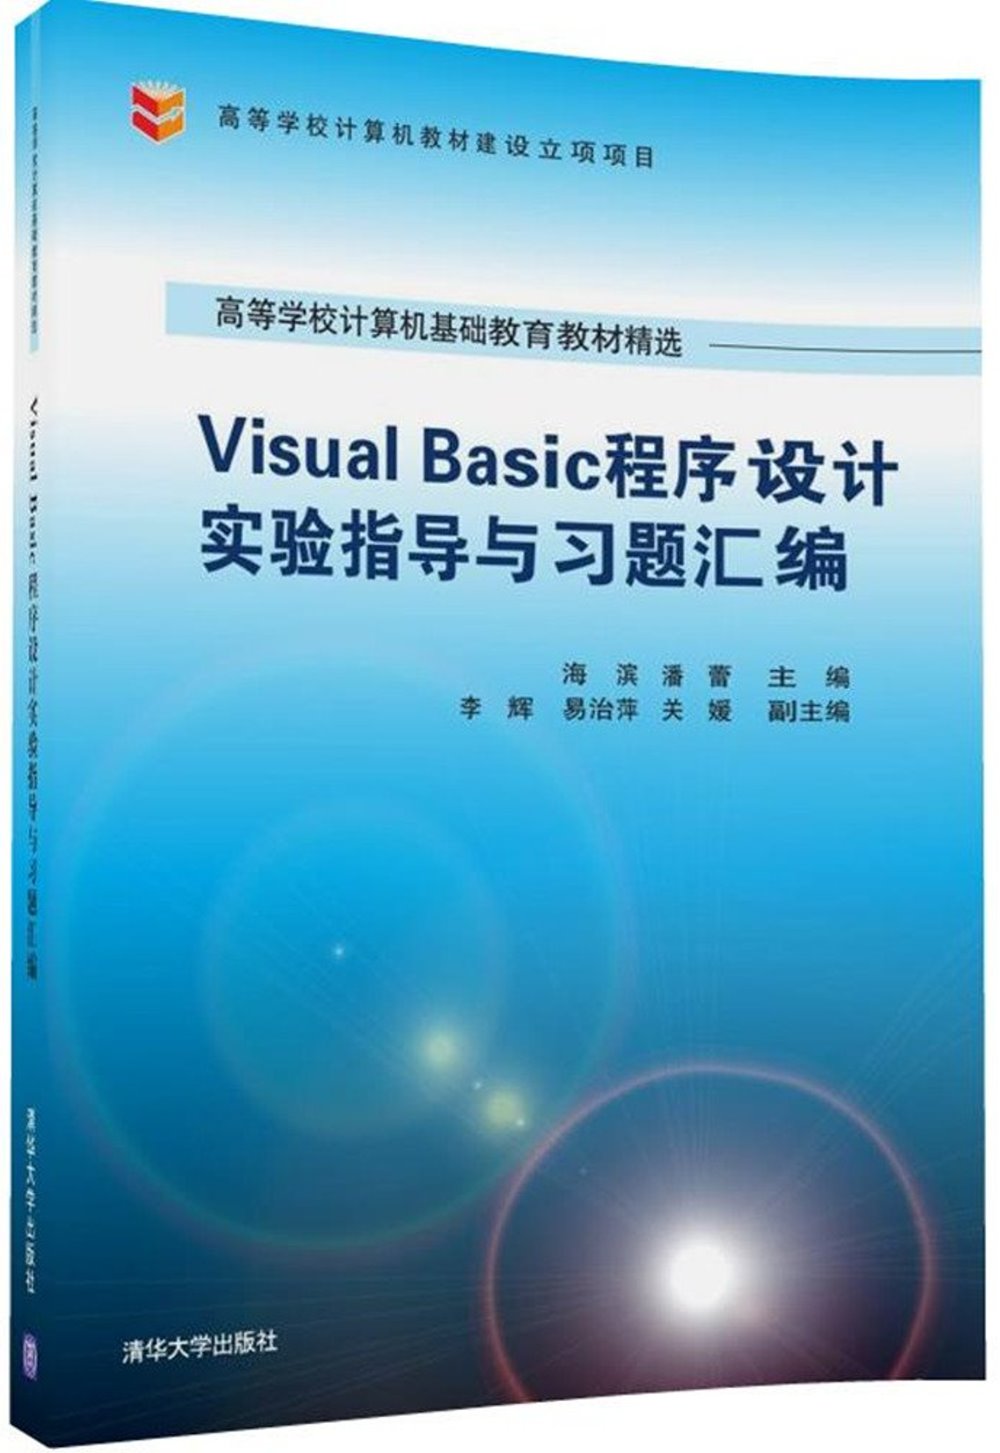 Visual Basic程序設計實驗指導與習題匯編